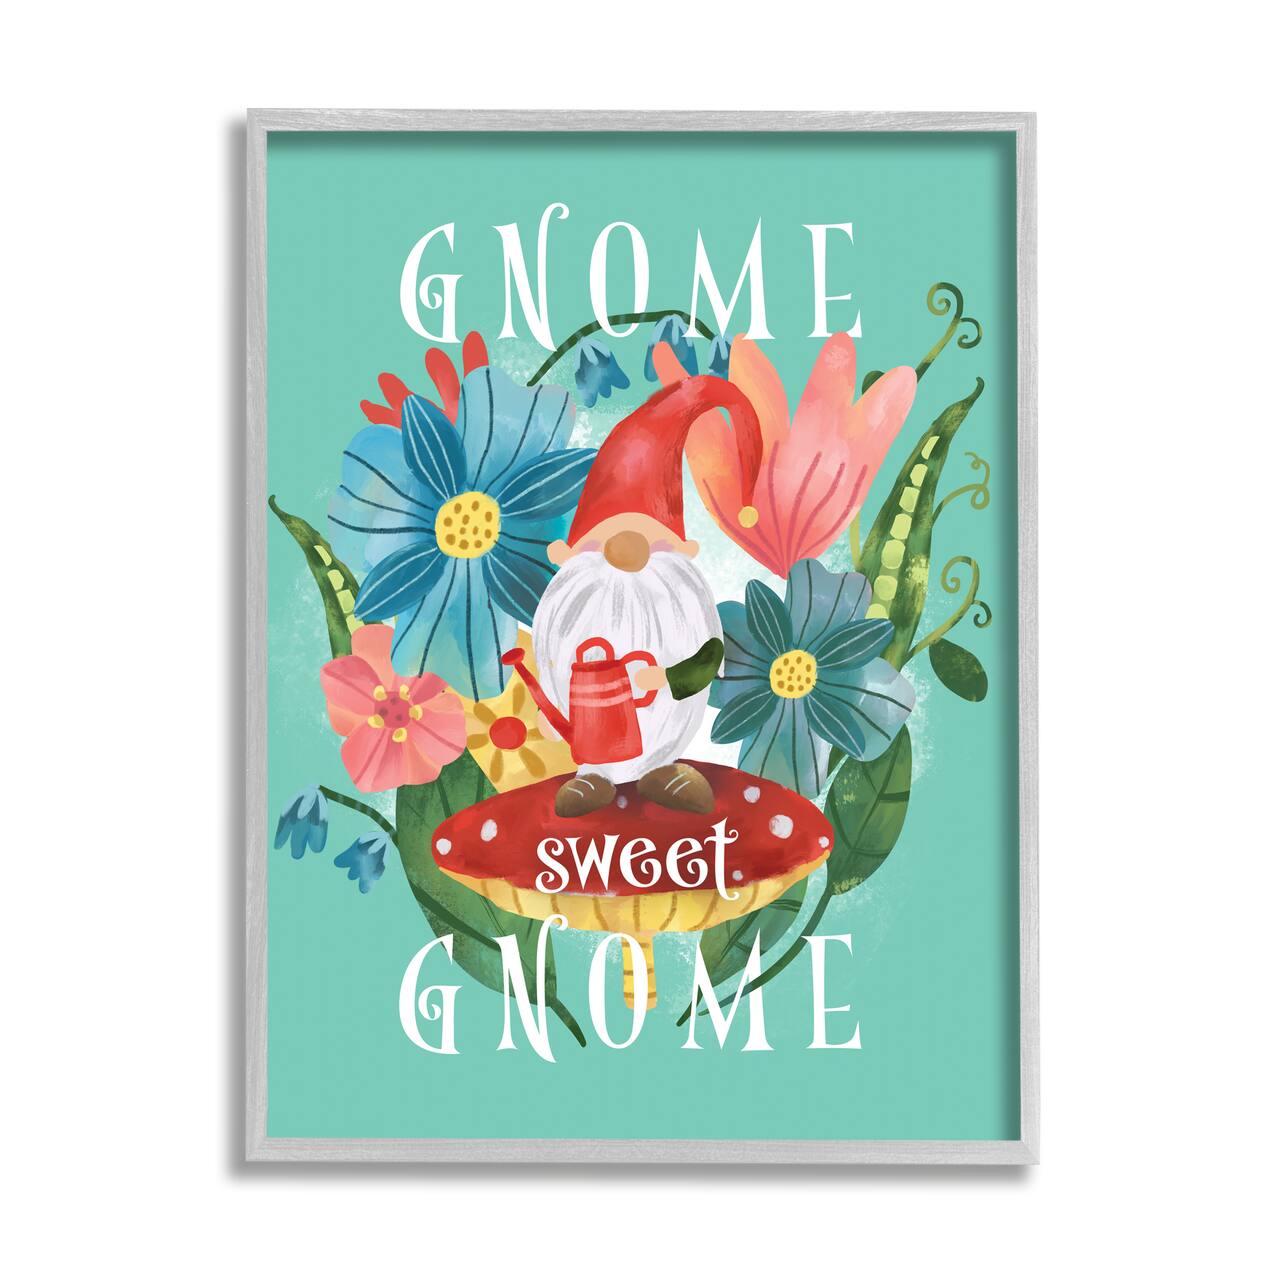 Stupell Industries Gnome Sweet Gnome Phrase Spring Floral Mushroom Garden Framed Wall Art